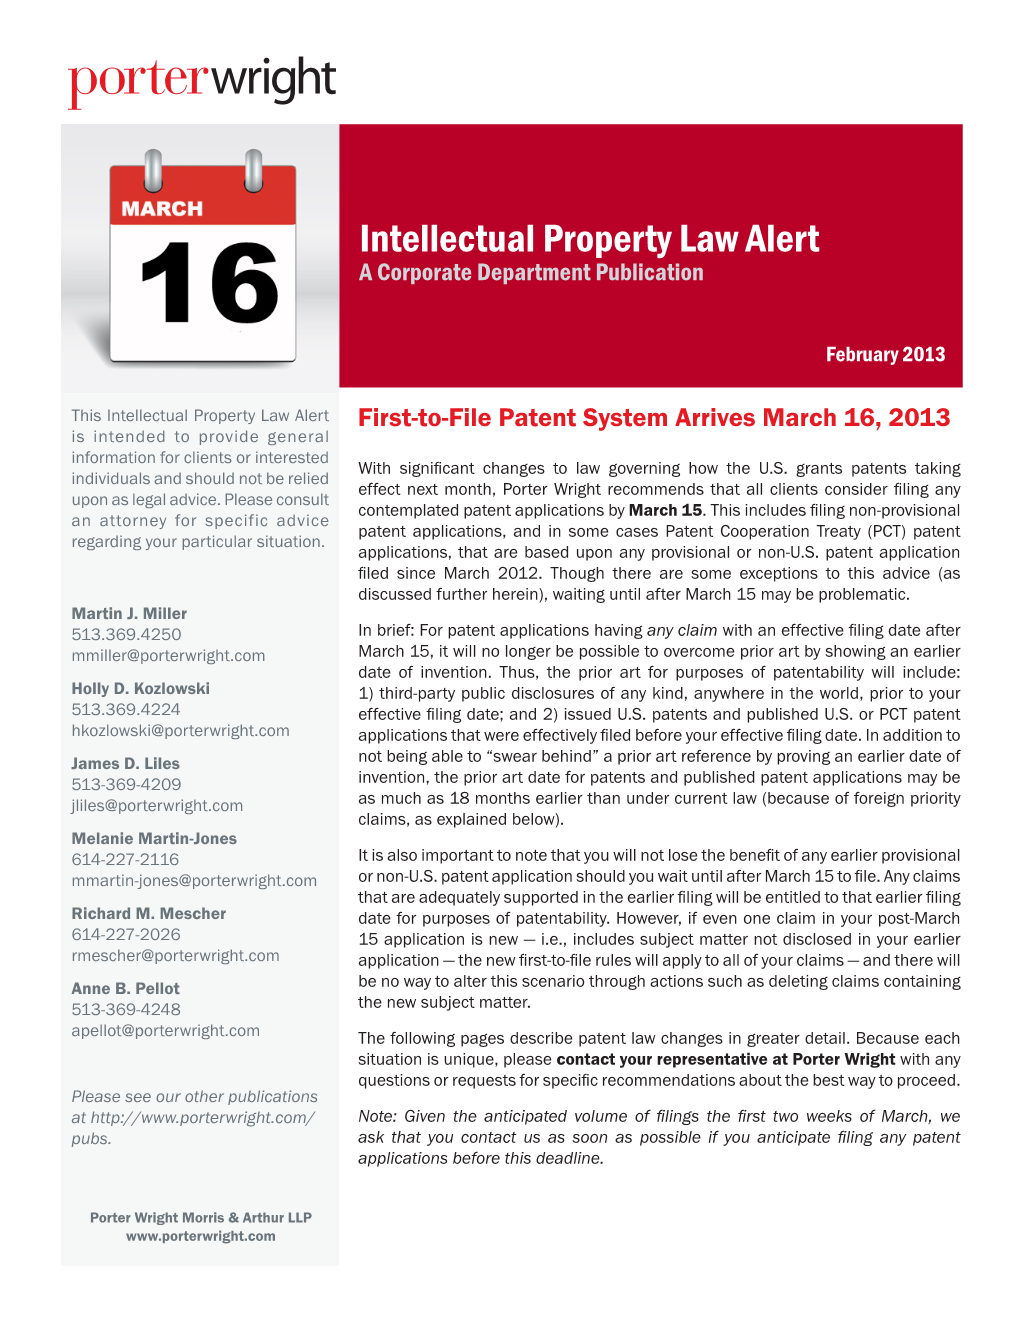 Intellectual Property Law Alert a Corporate Department Publication